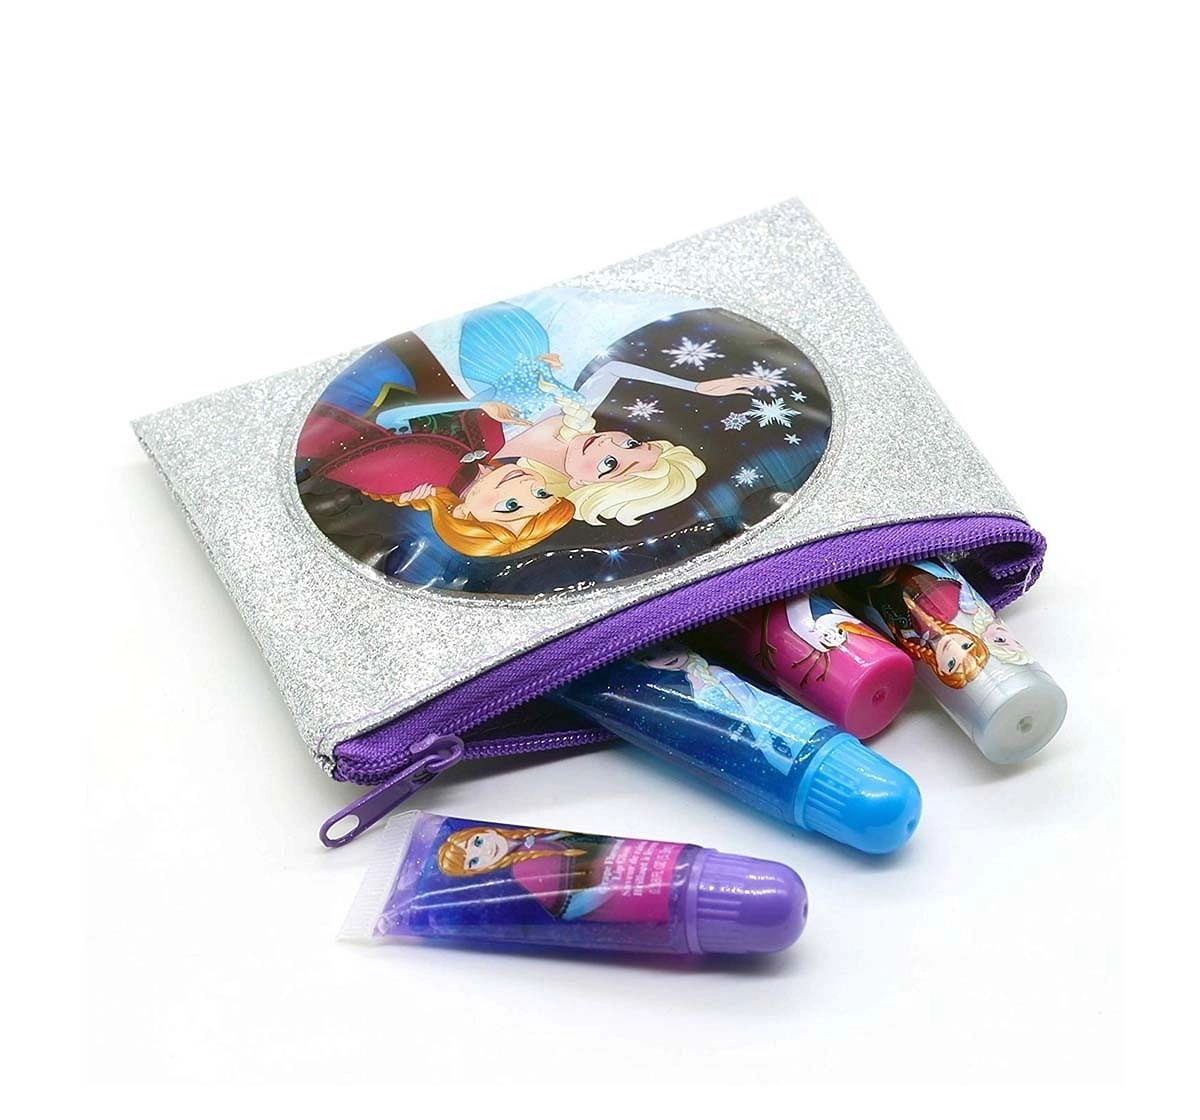 Disney Frozen Cosmetic Set DIY Art & Craft Kits for Kids age 3Y+ 